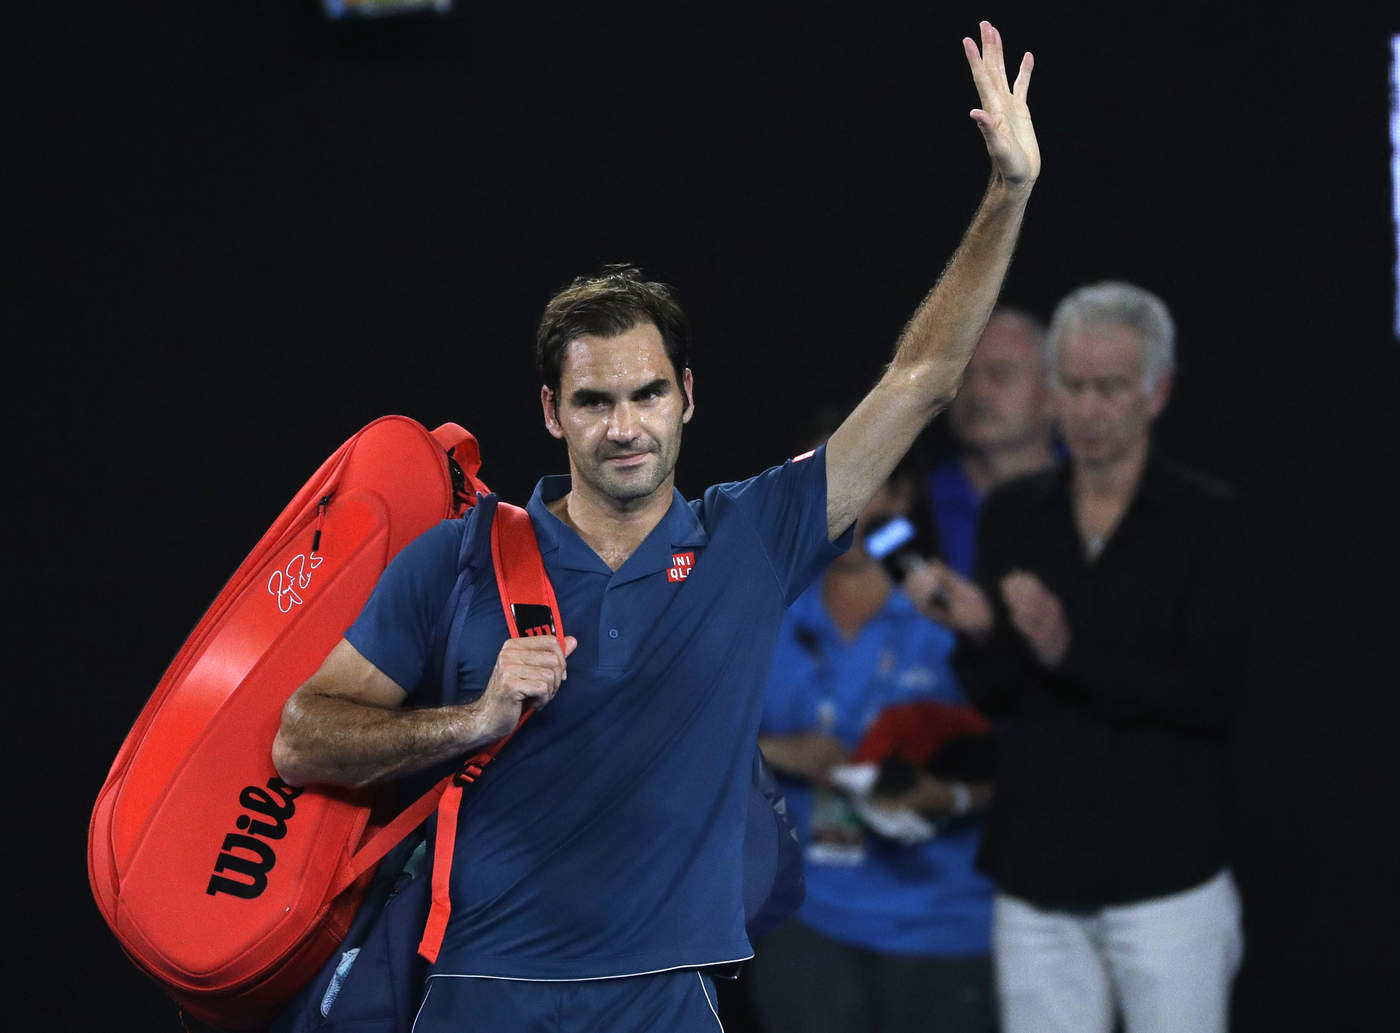 Djokovic aumenta ventaja; Federer cae al sexto lugar